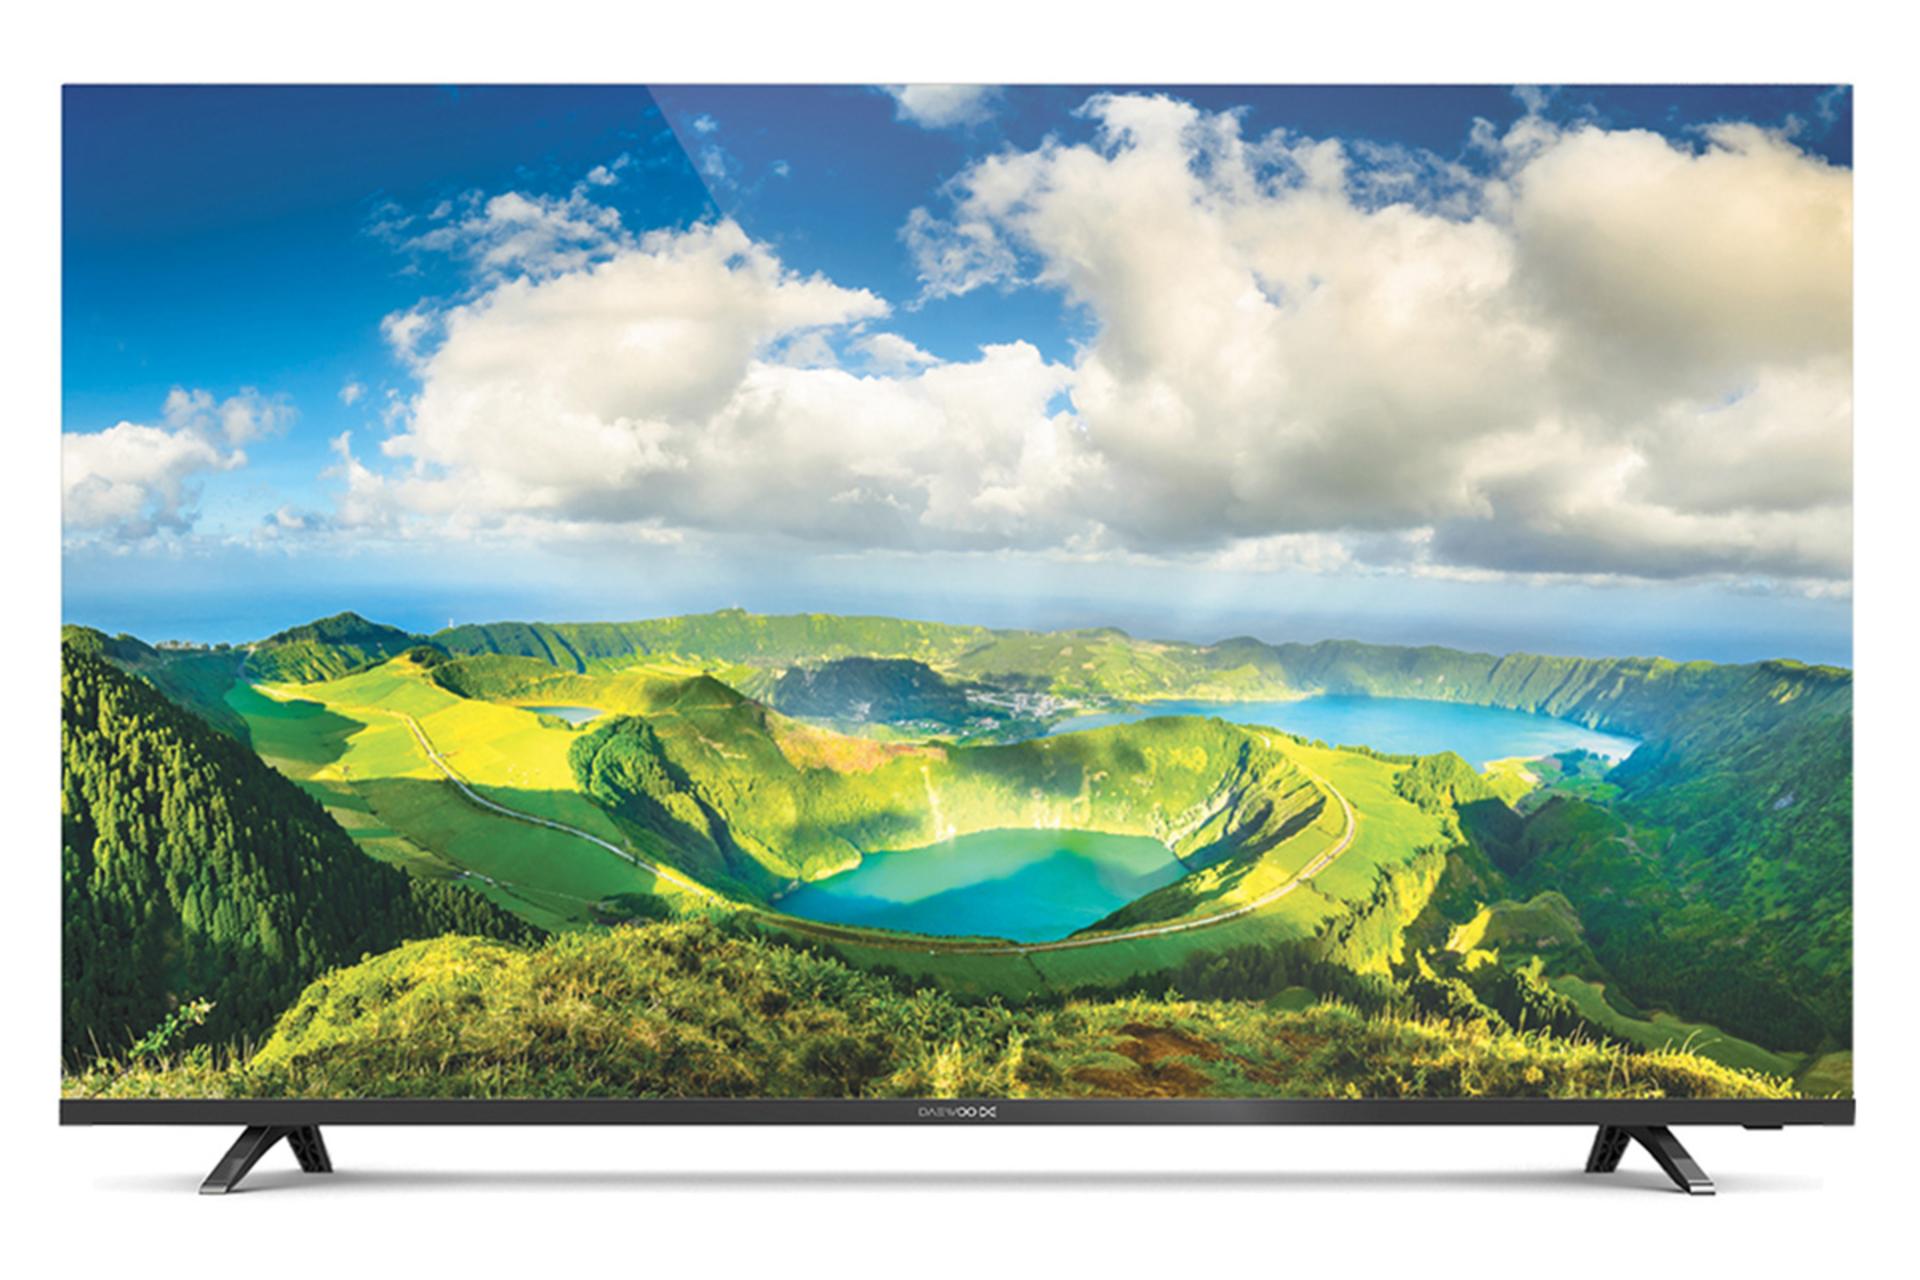 قیمت تلویزیون دوو SU1500 مدل 50 اینچ + مشخصات